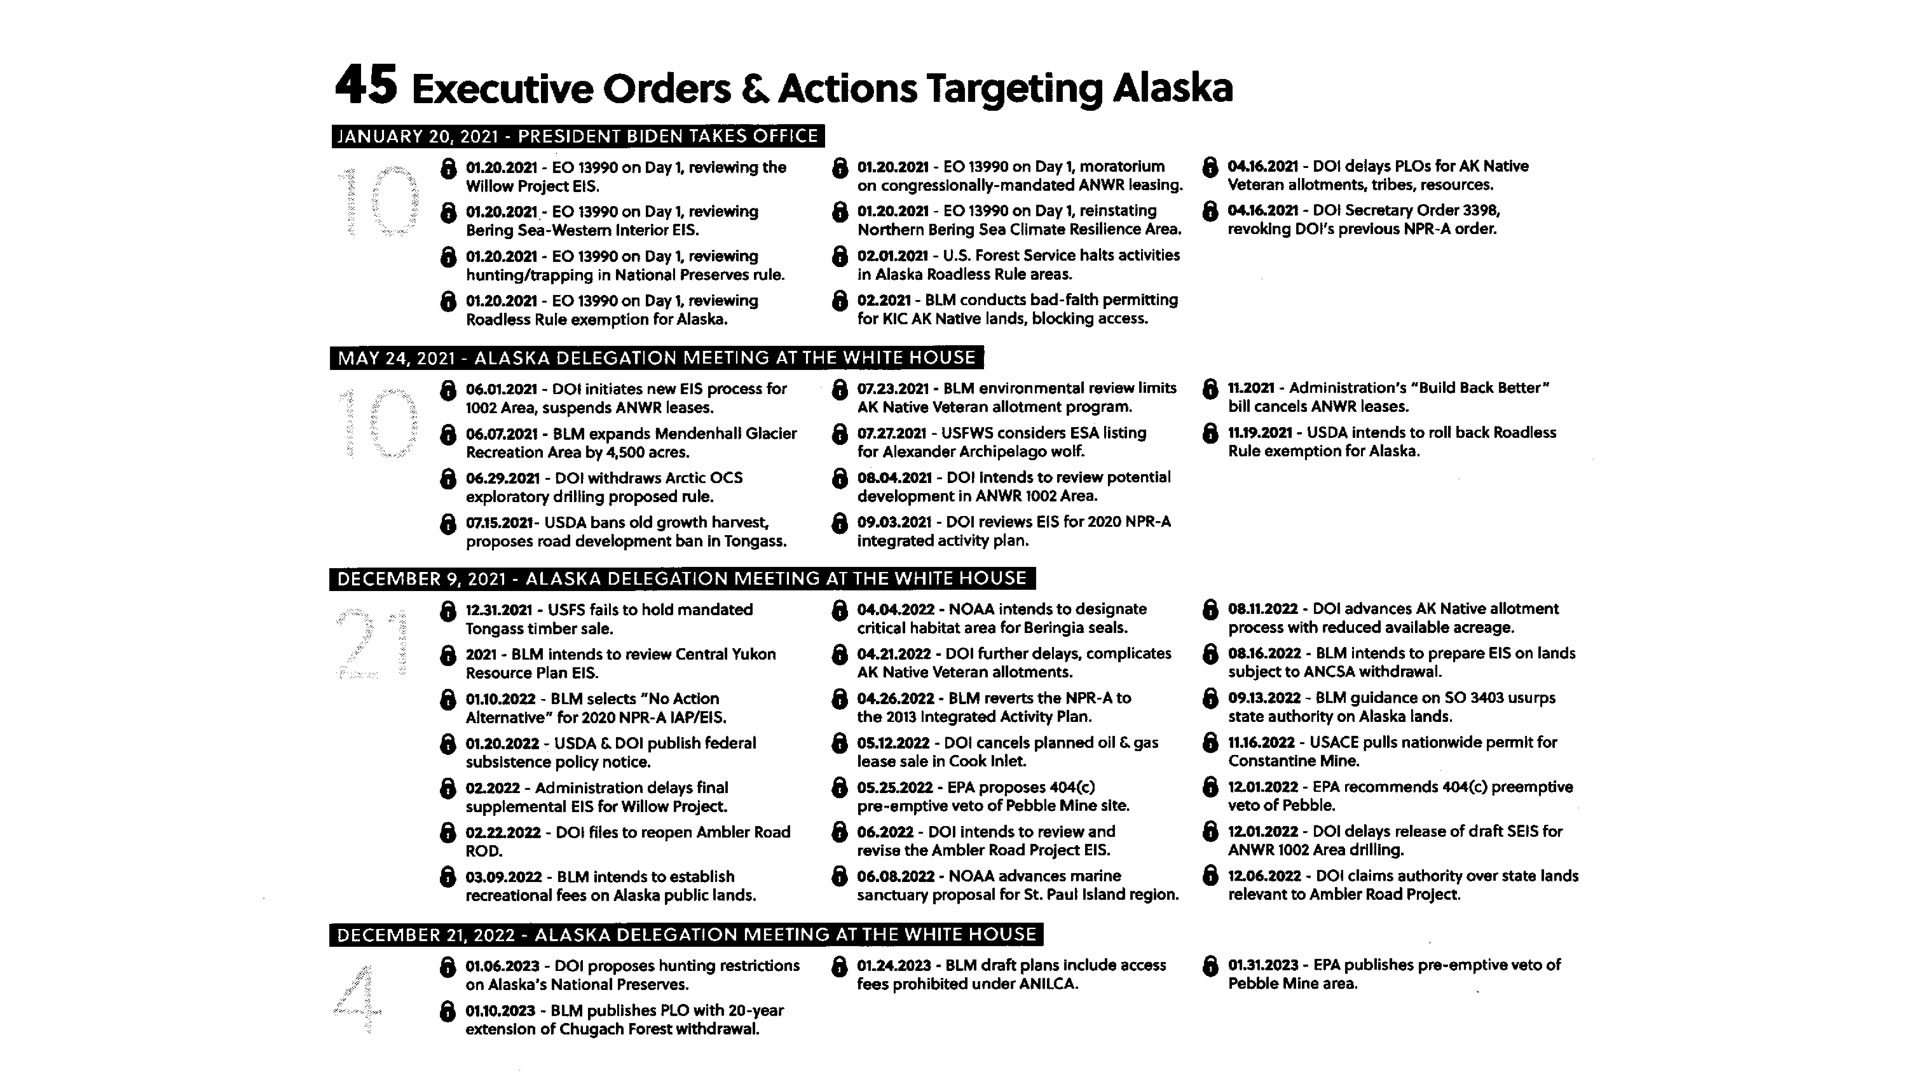 alaska sen. dan sullivan handout on biden executive orders harming alaska hunting, energy